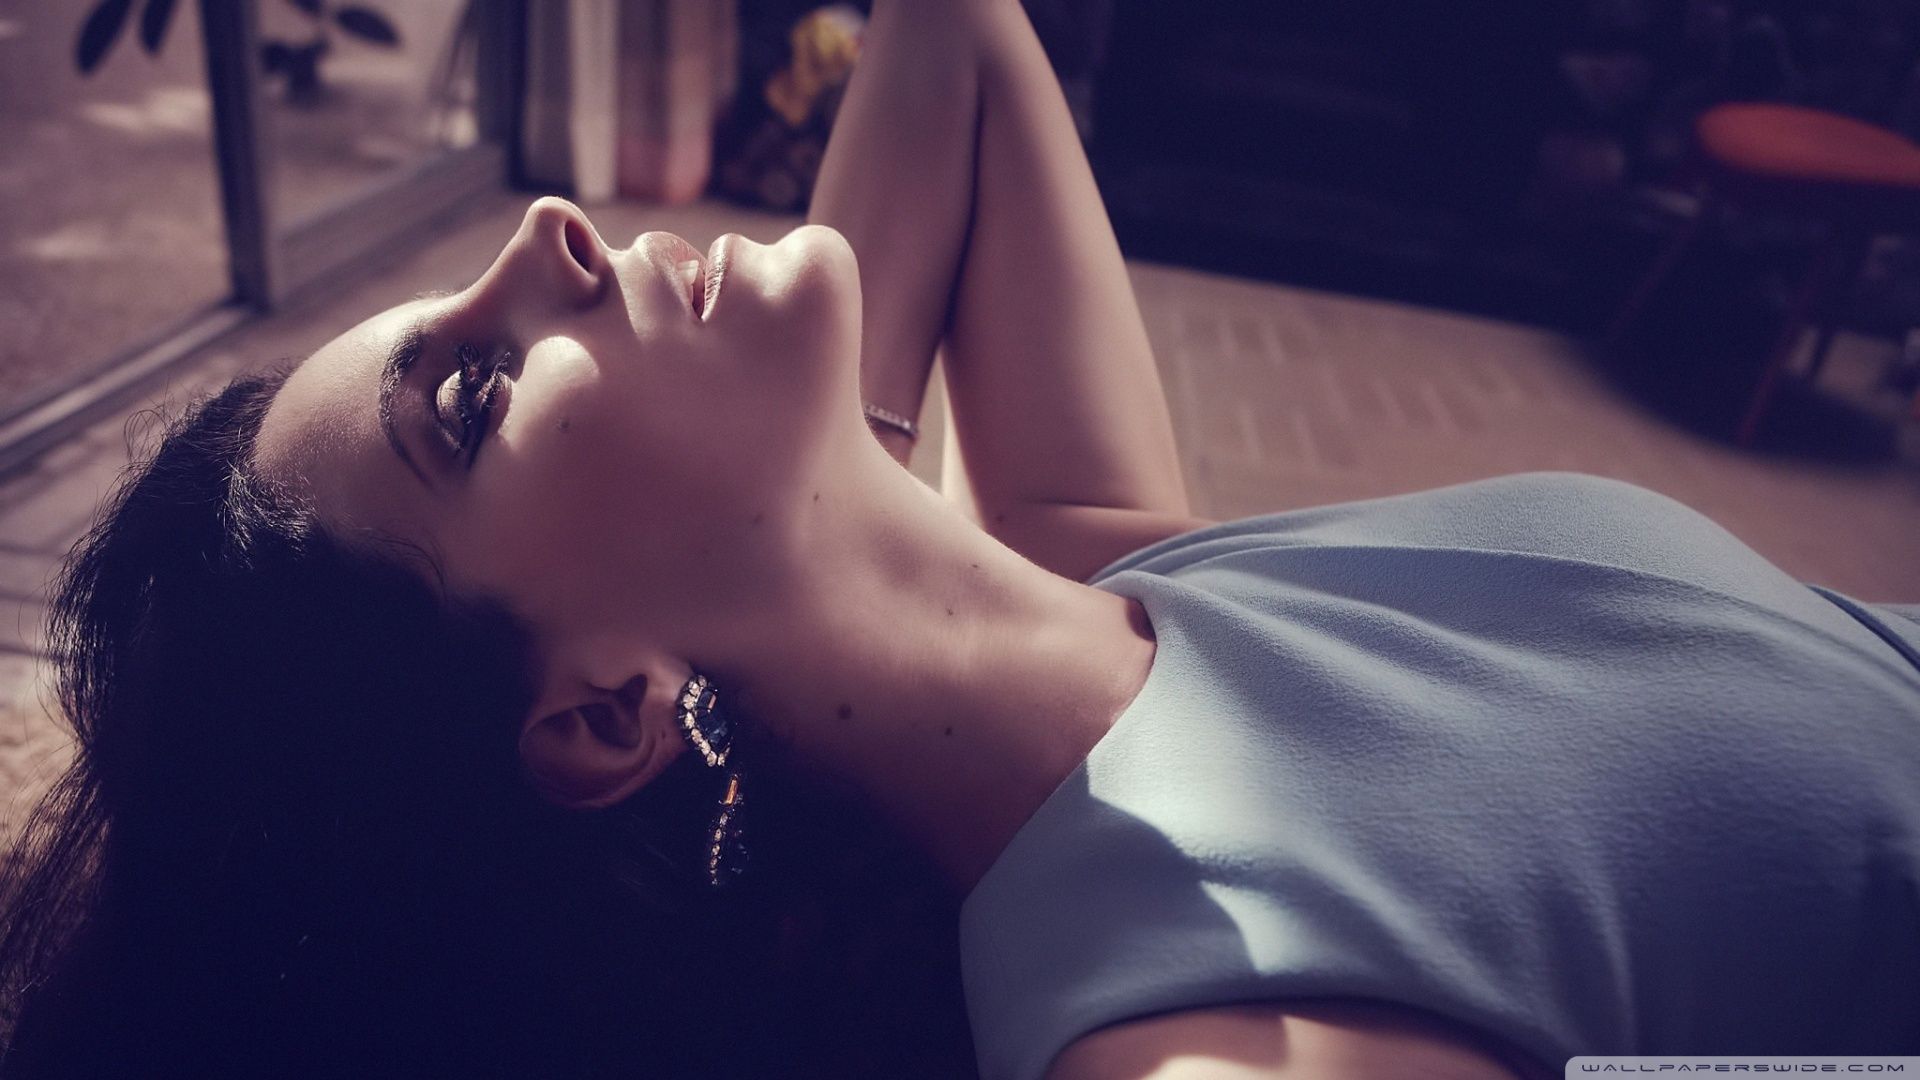 A woman lying on the floor - Lana Del Rey